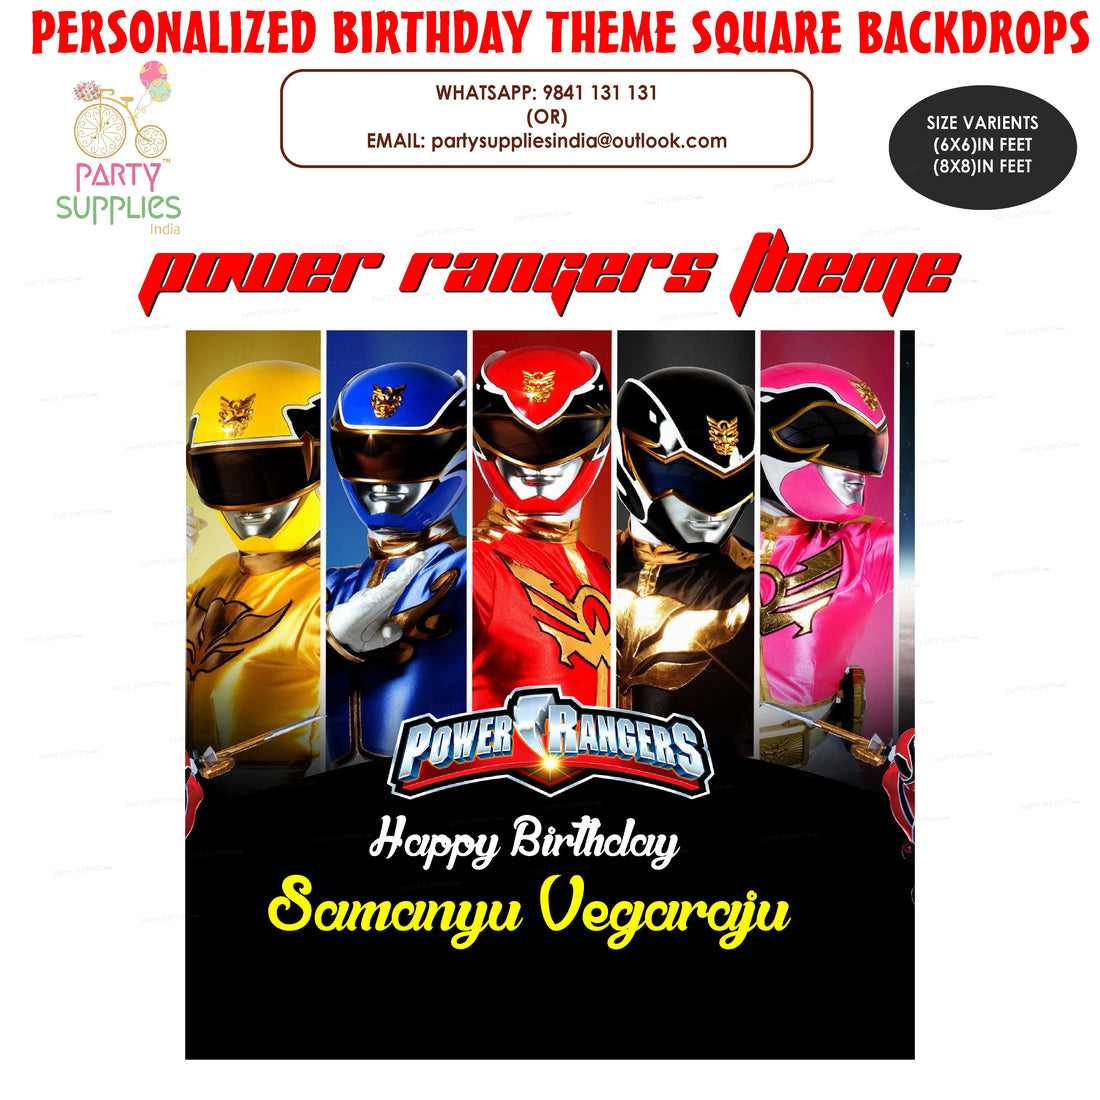 PSI Power Rangers Theme Customized Square Backdrop